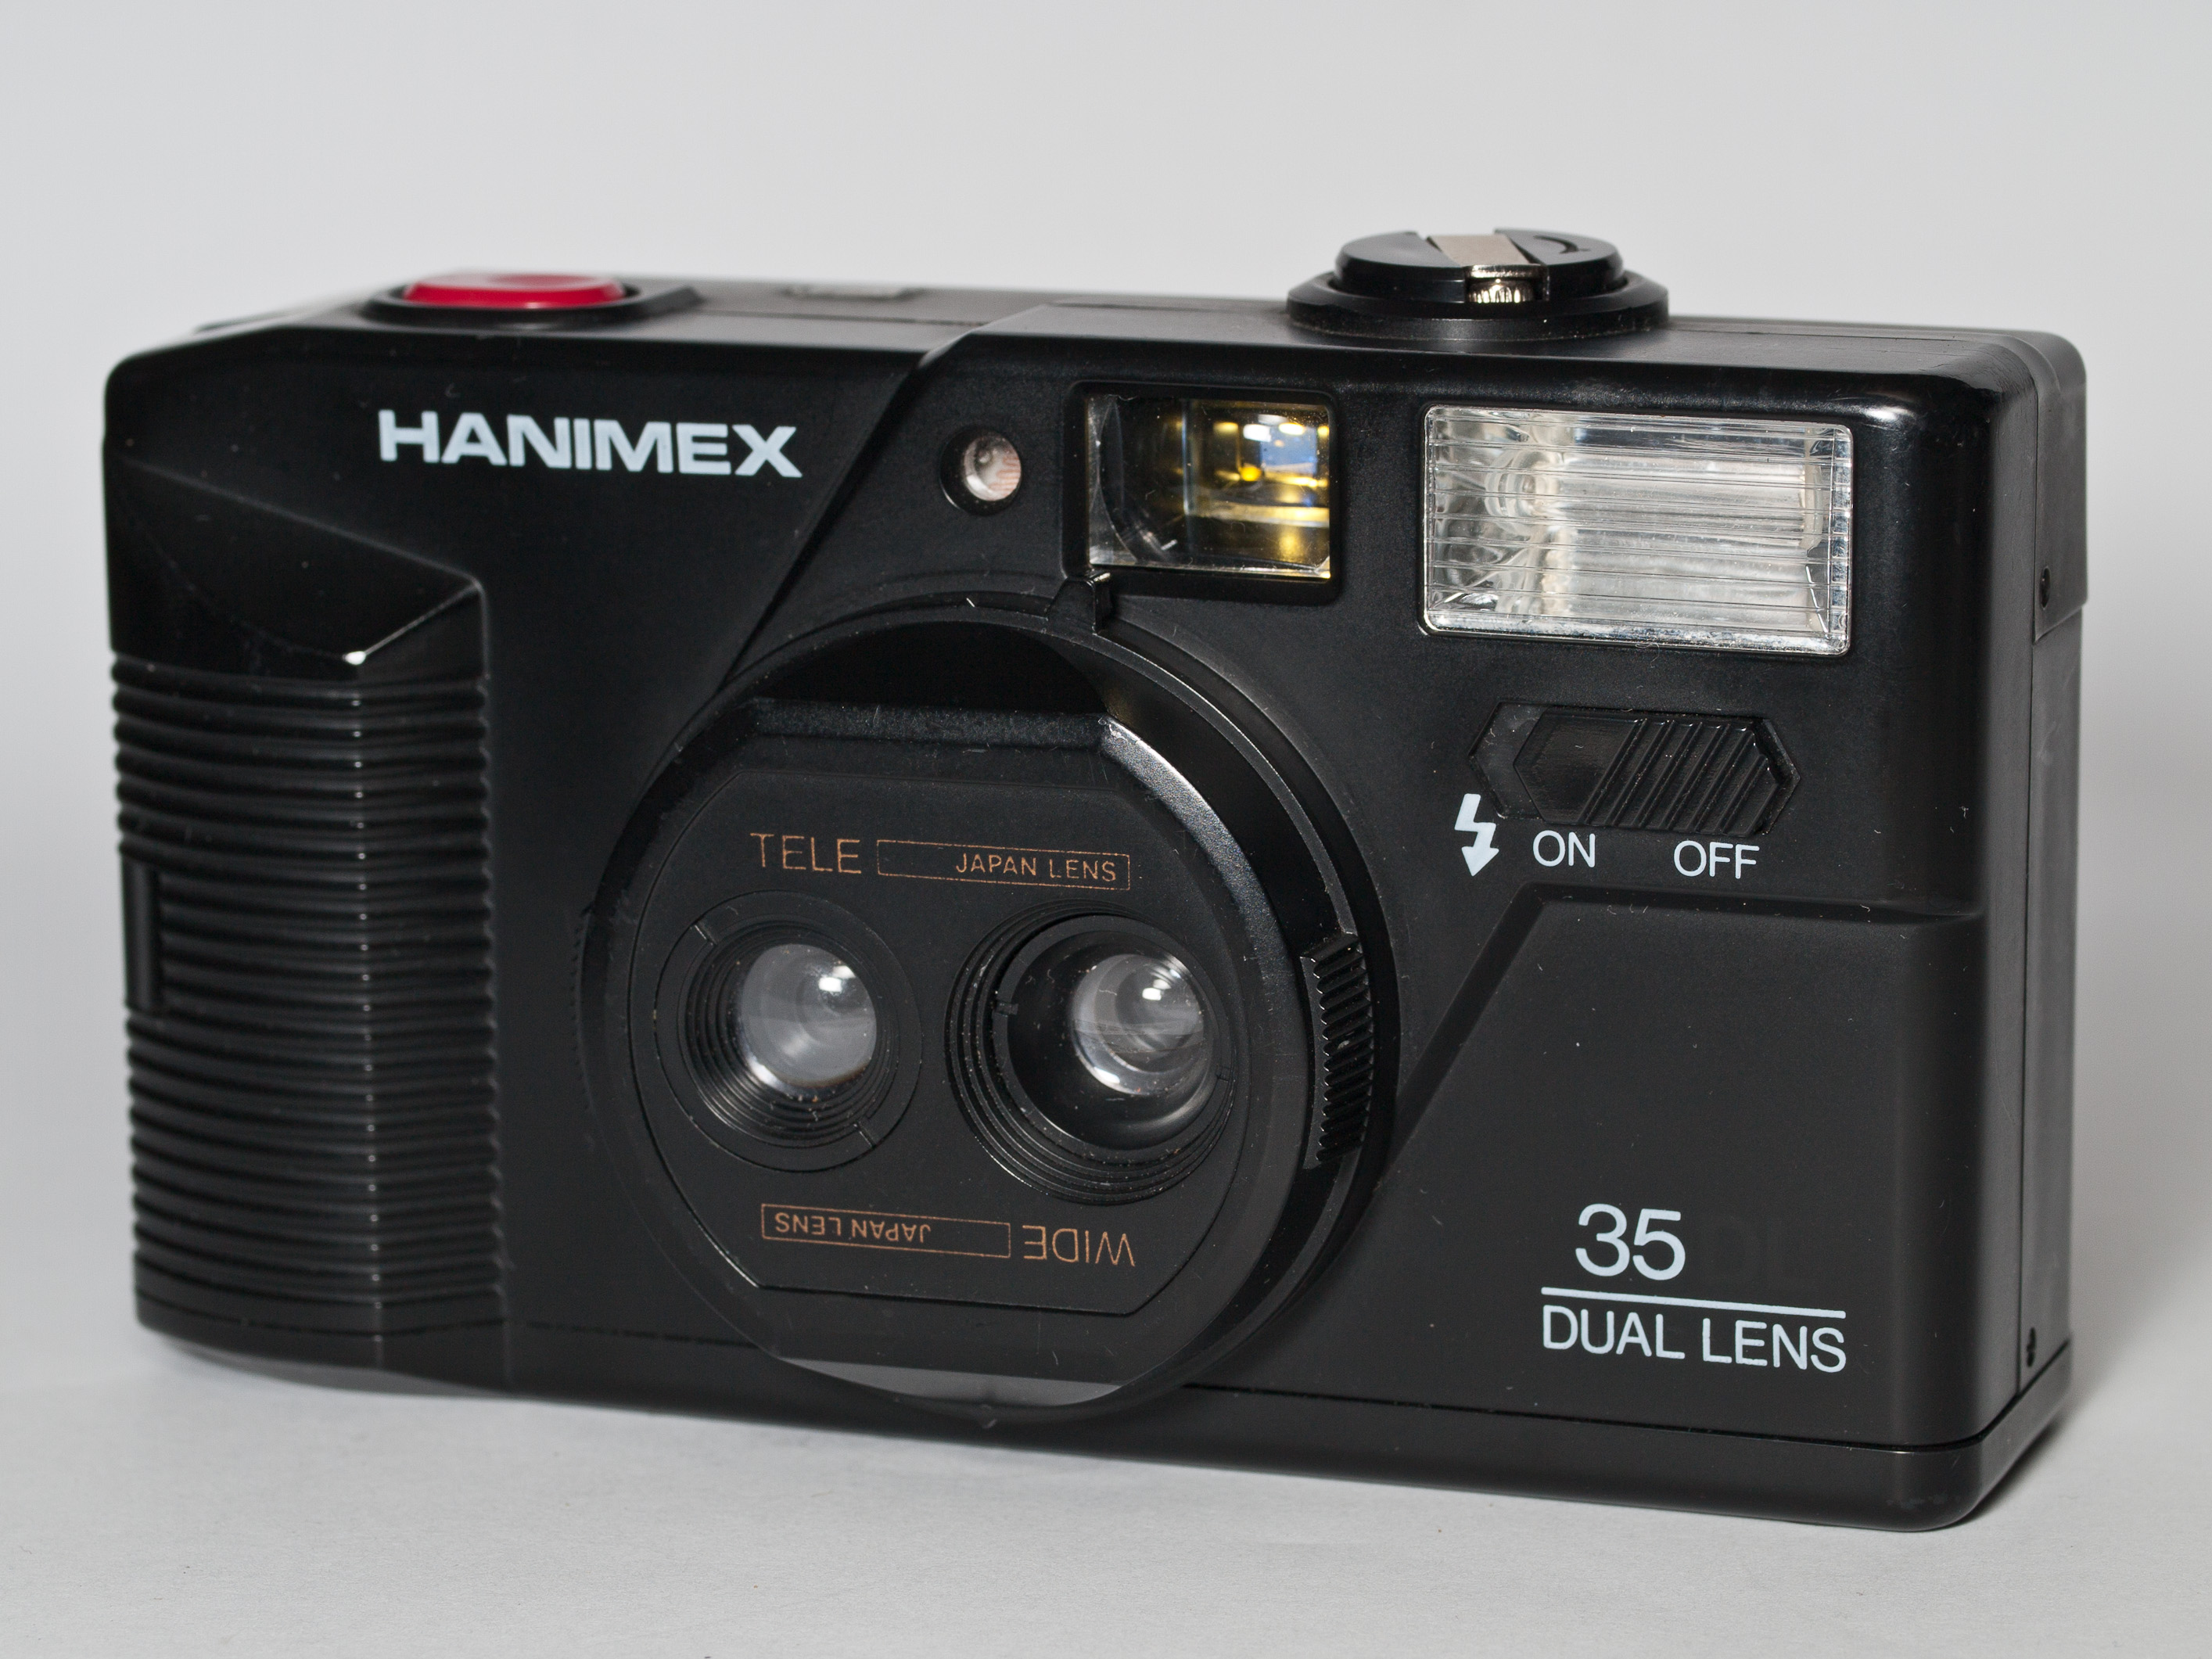 Hanimex 35 dual lens